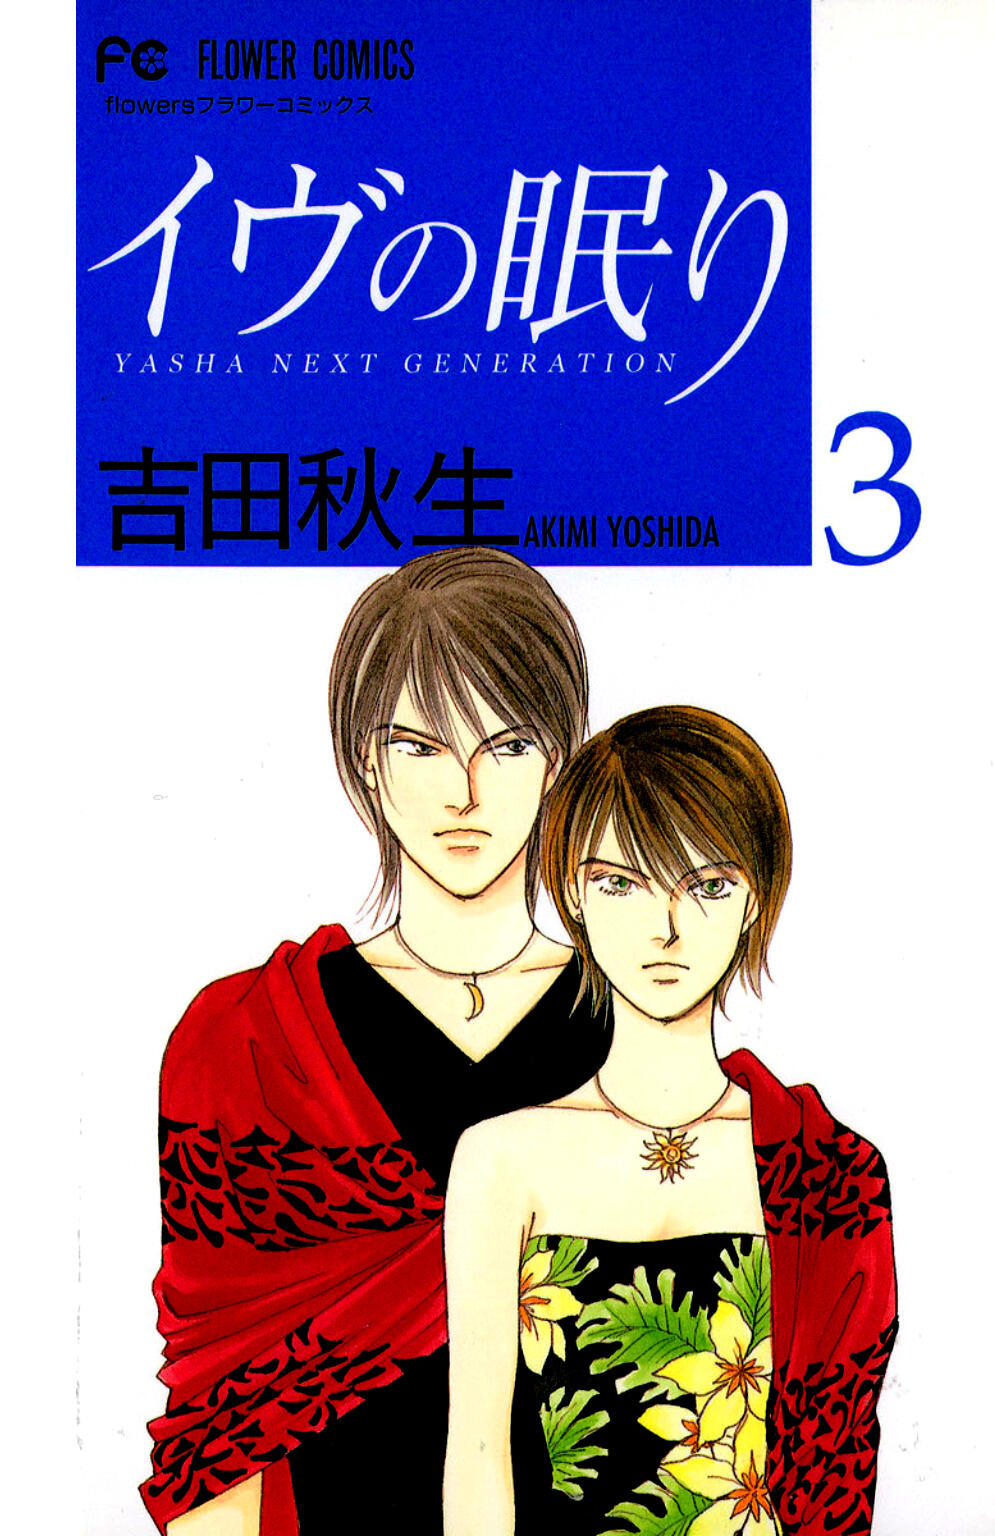 Read Eve No Nemuri Vol.3 Chapter 8 on Mangakakalot